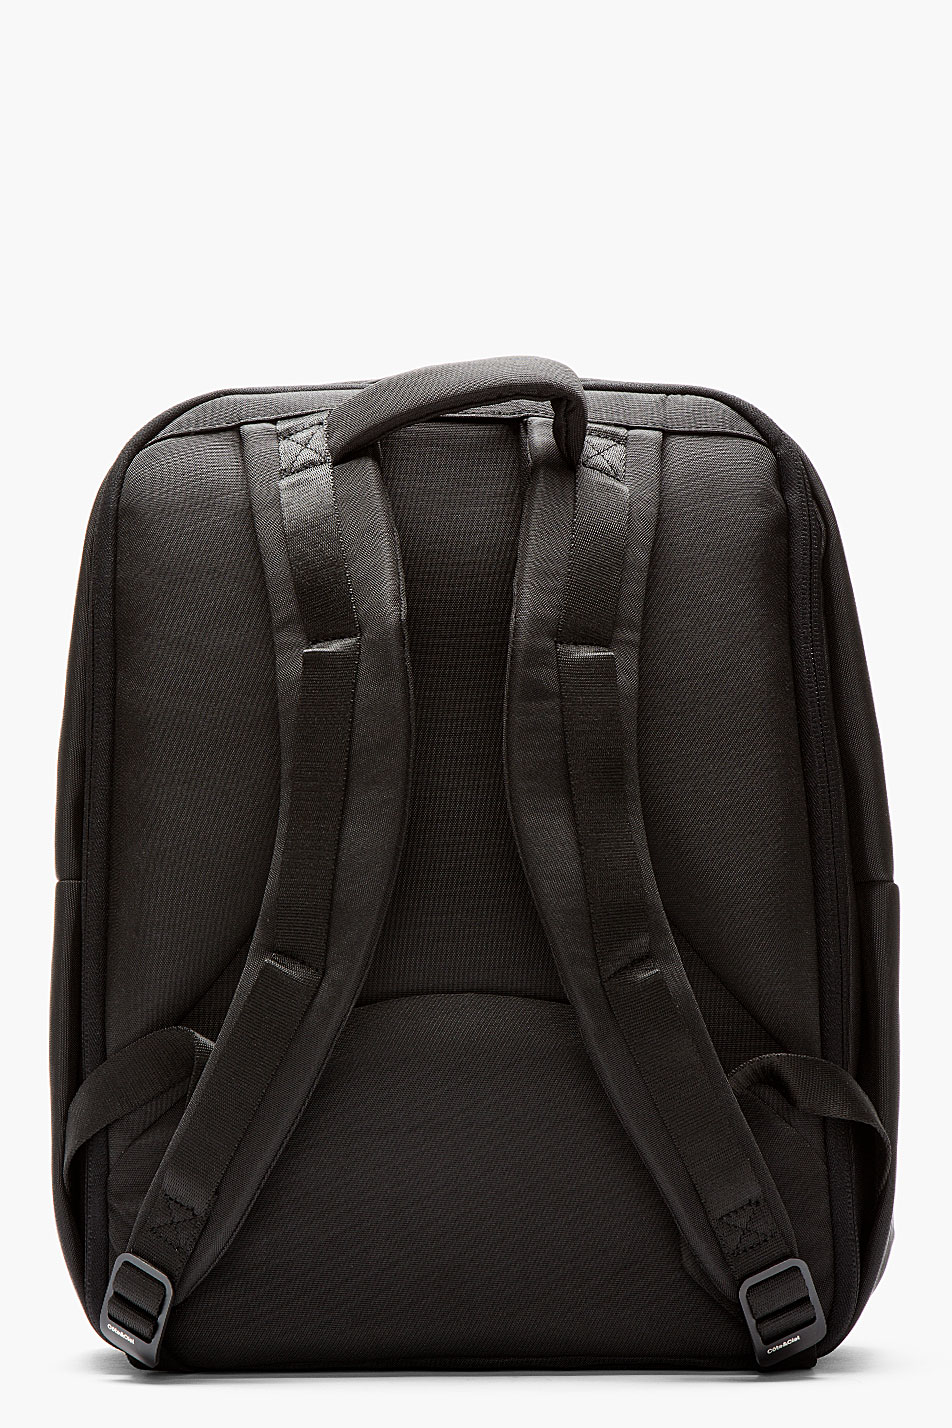 Côte&Ciel Black Minimalist New Flat Rhine Backpack for Men - Lyst